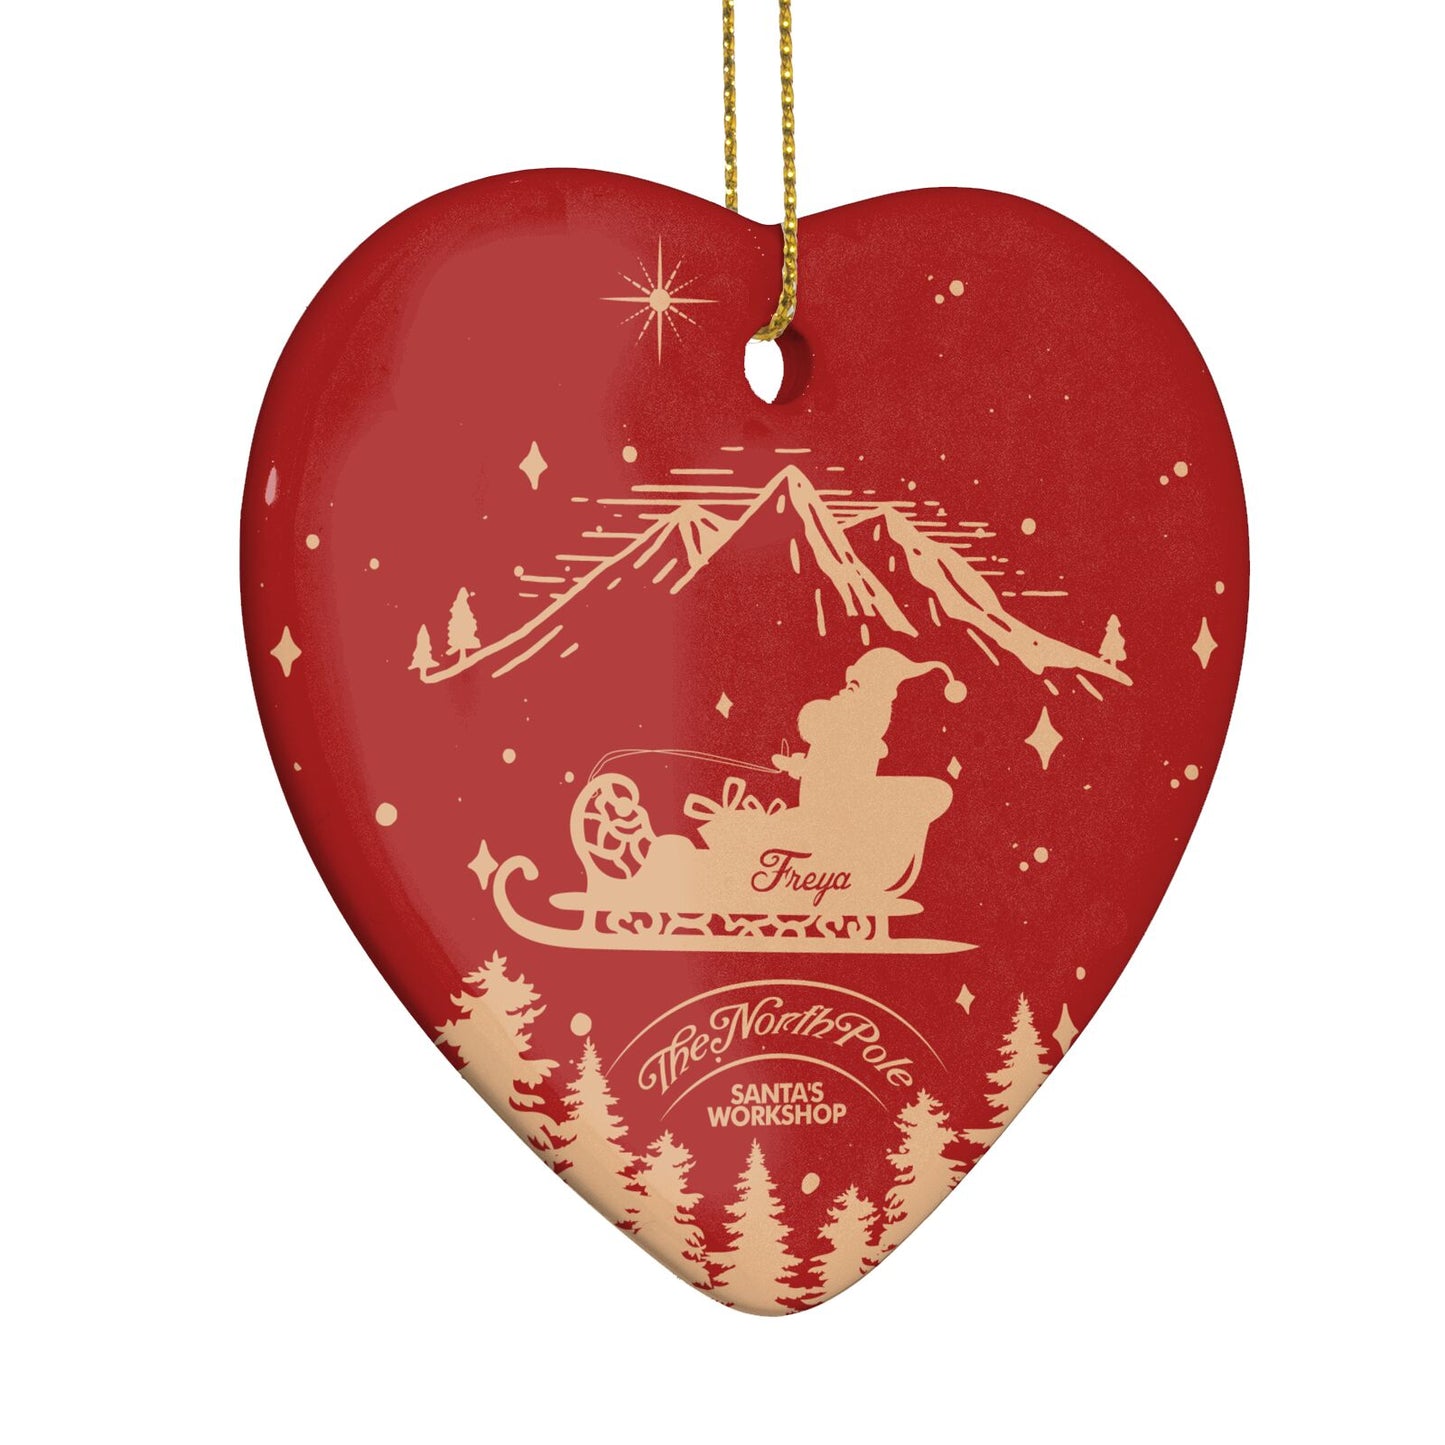 Santas Workshop Personalised Heart Decoration Side Angle